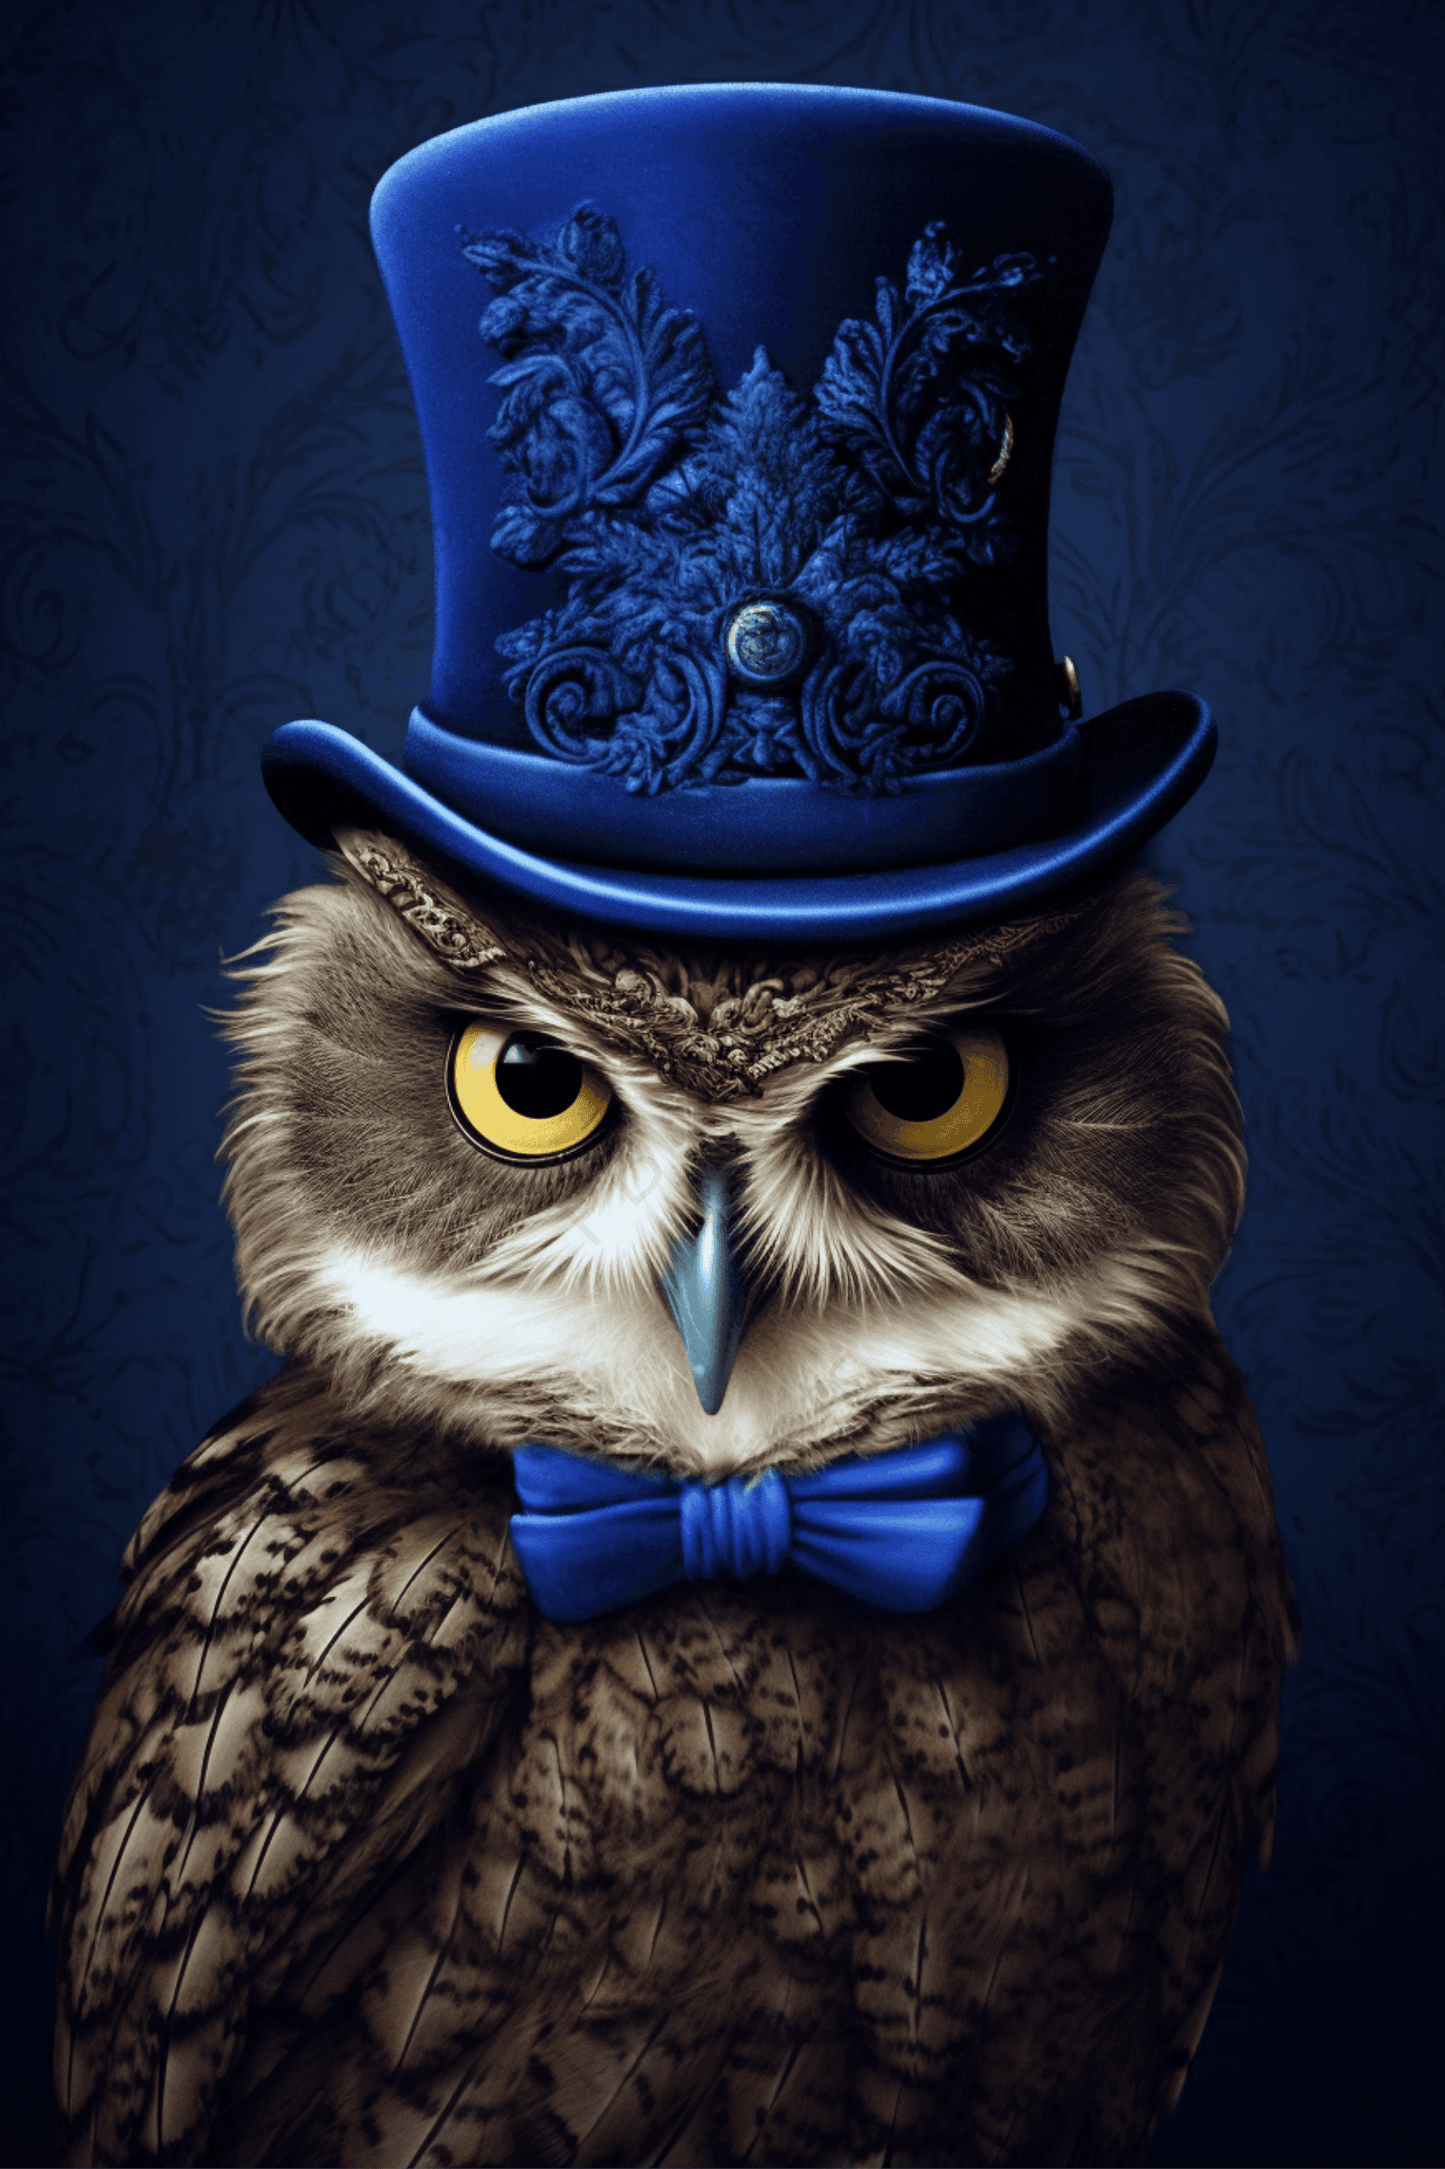 Royal Owl - Artist by Audrey Hughes - 